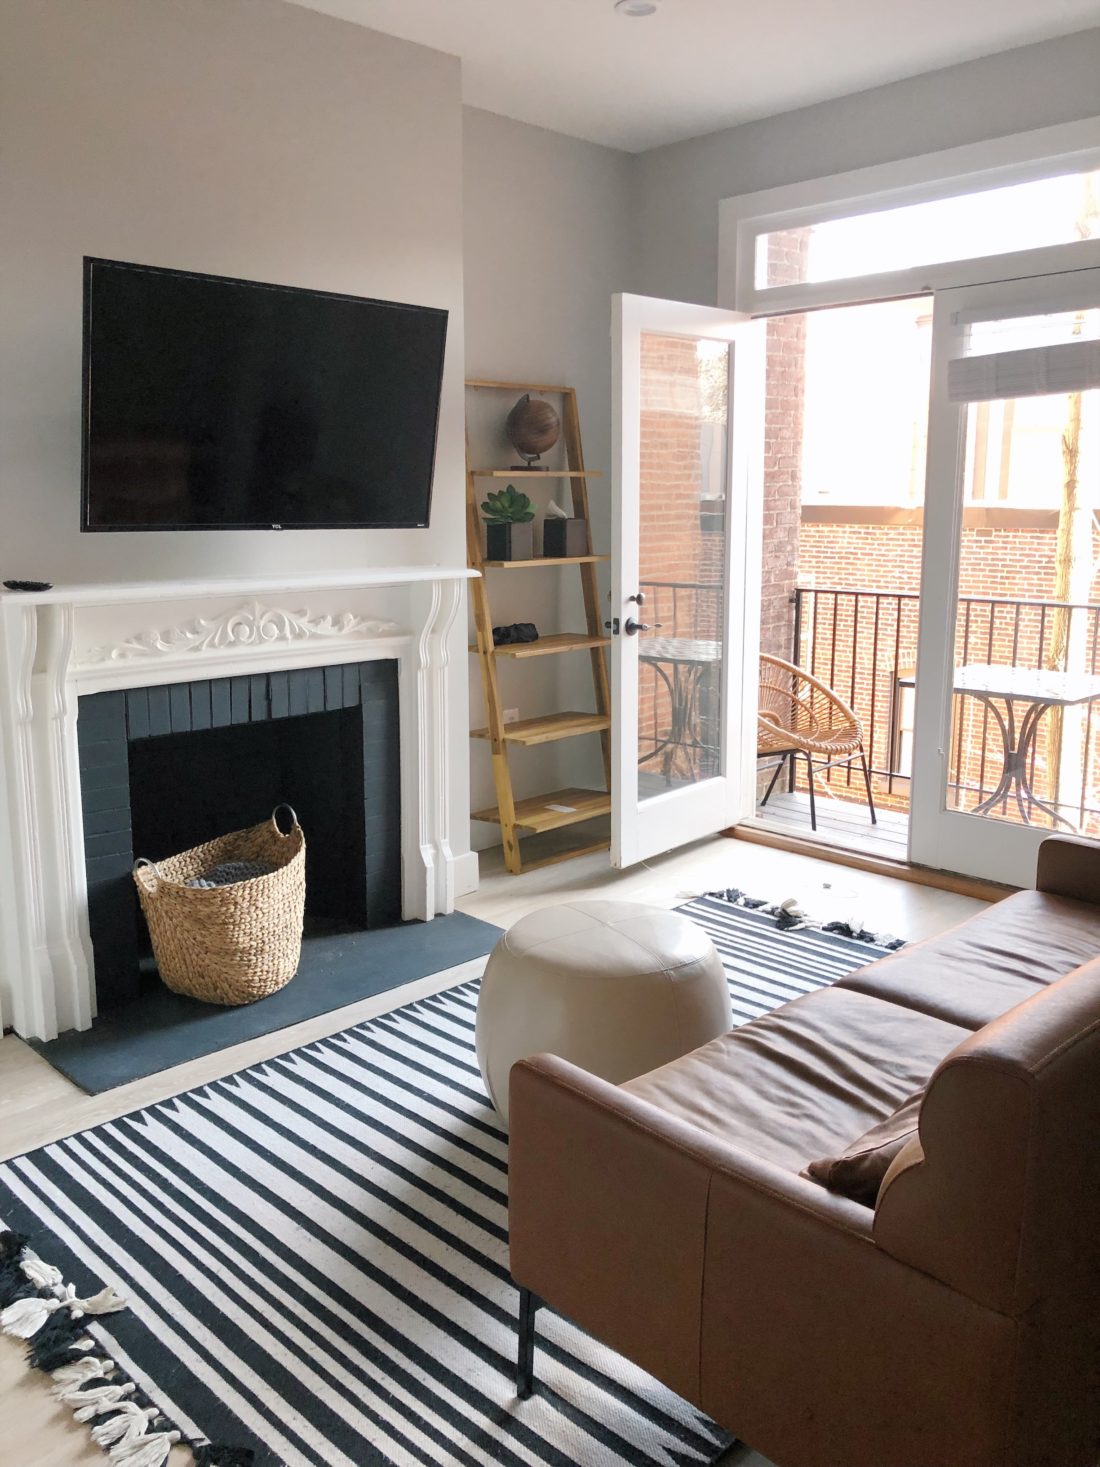 dupont circle washington dc airbnb apartment rental review